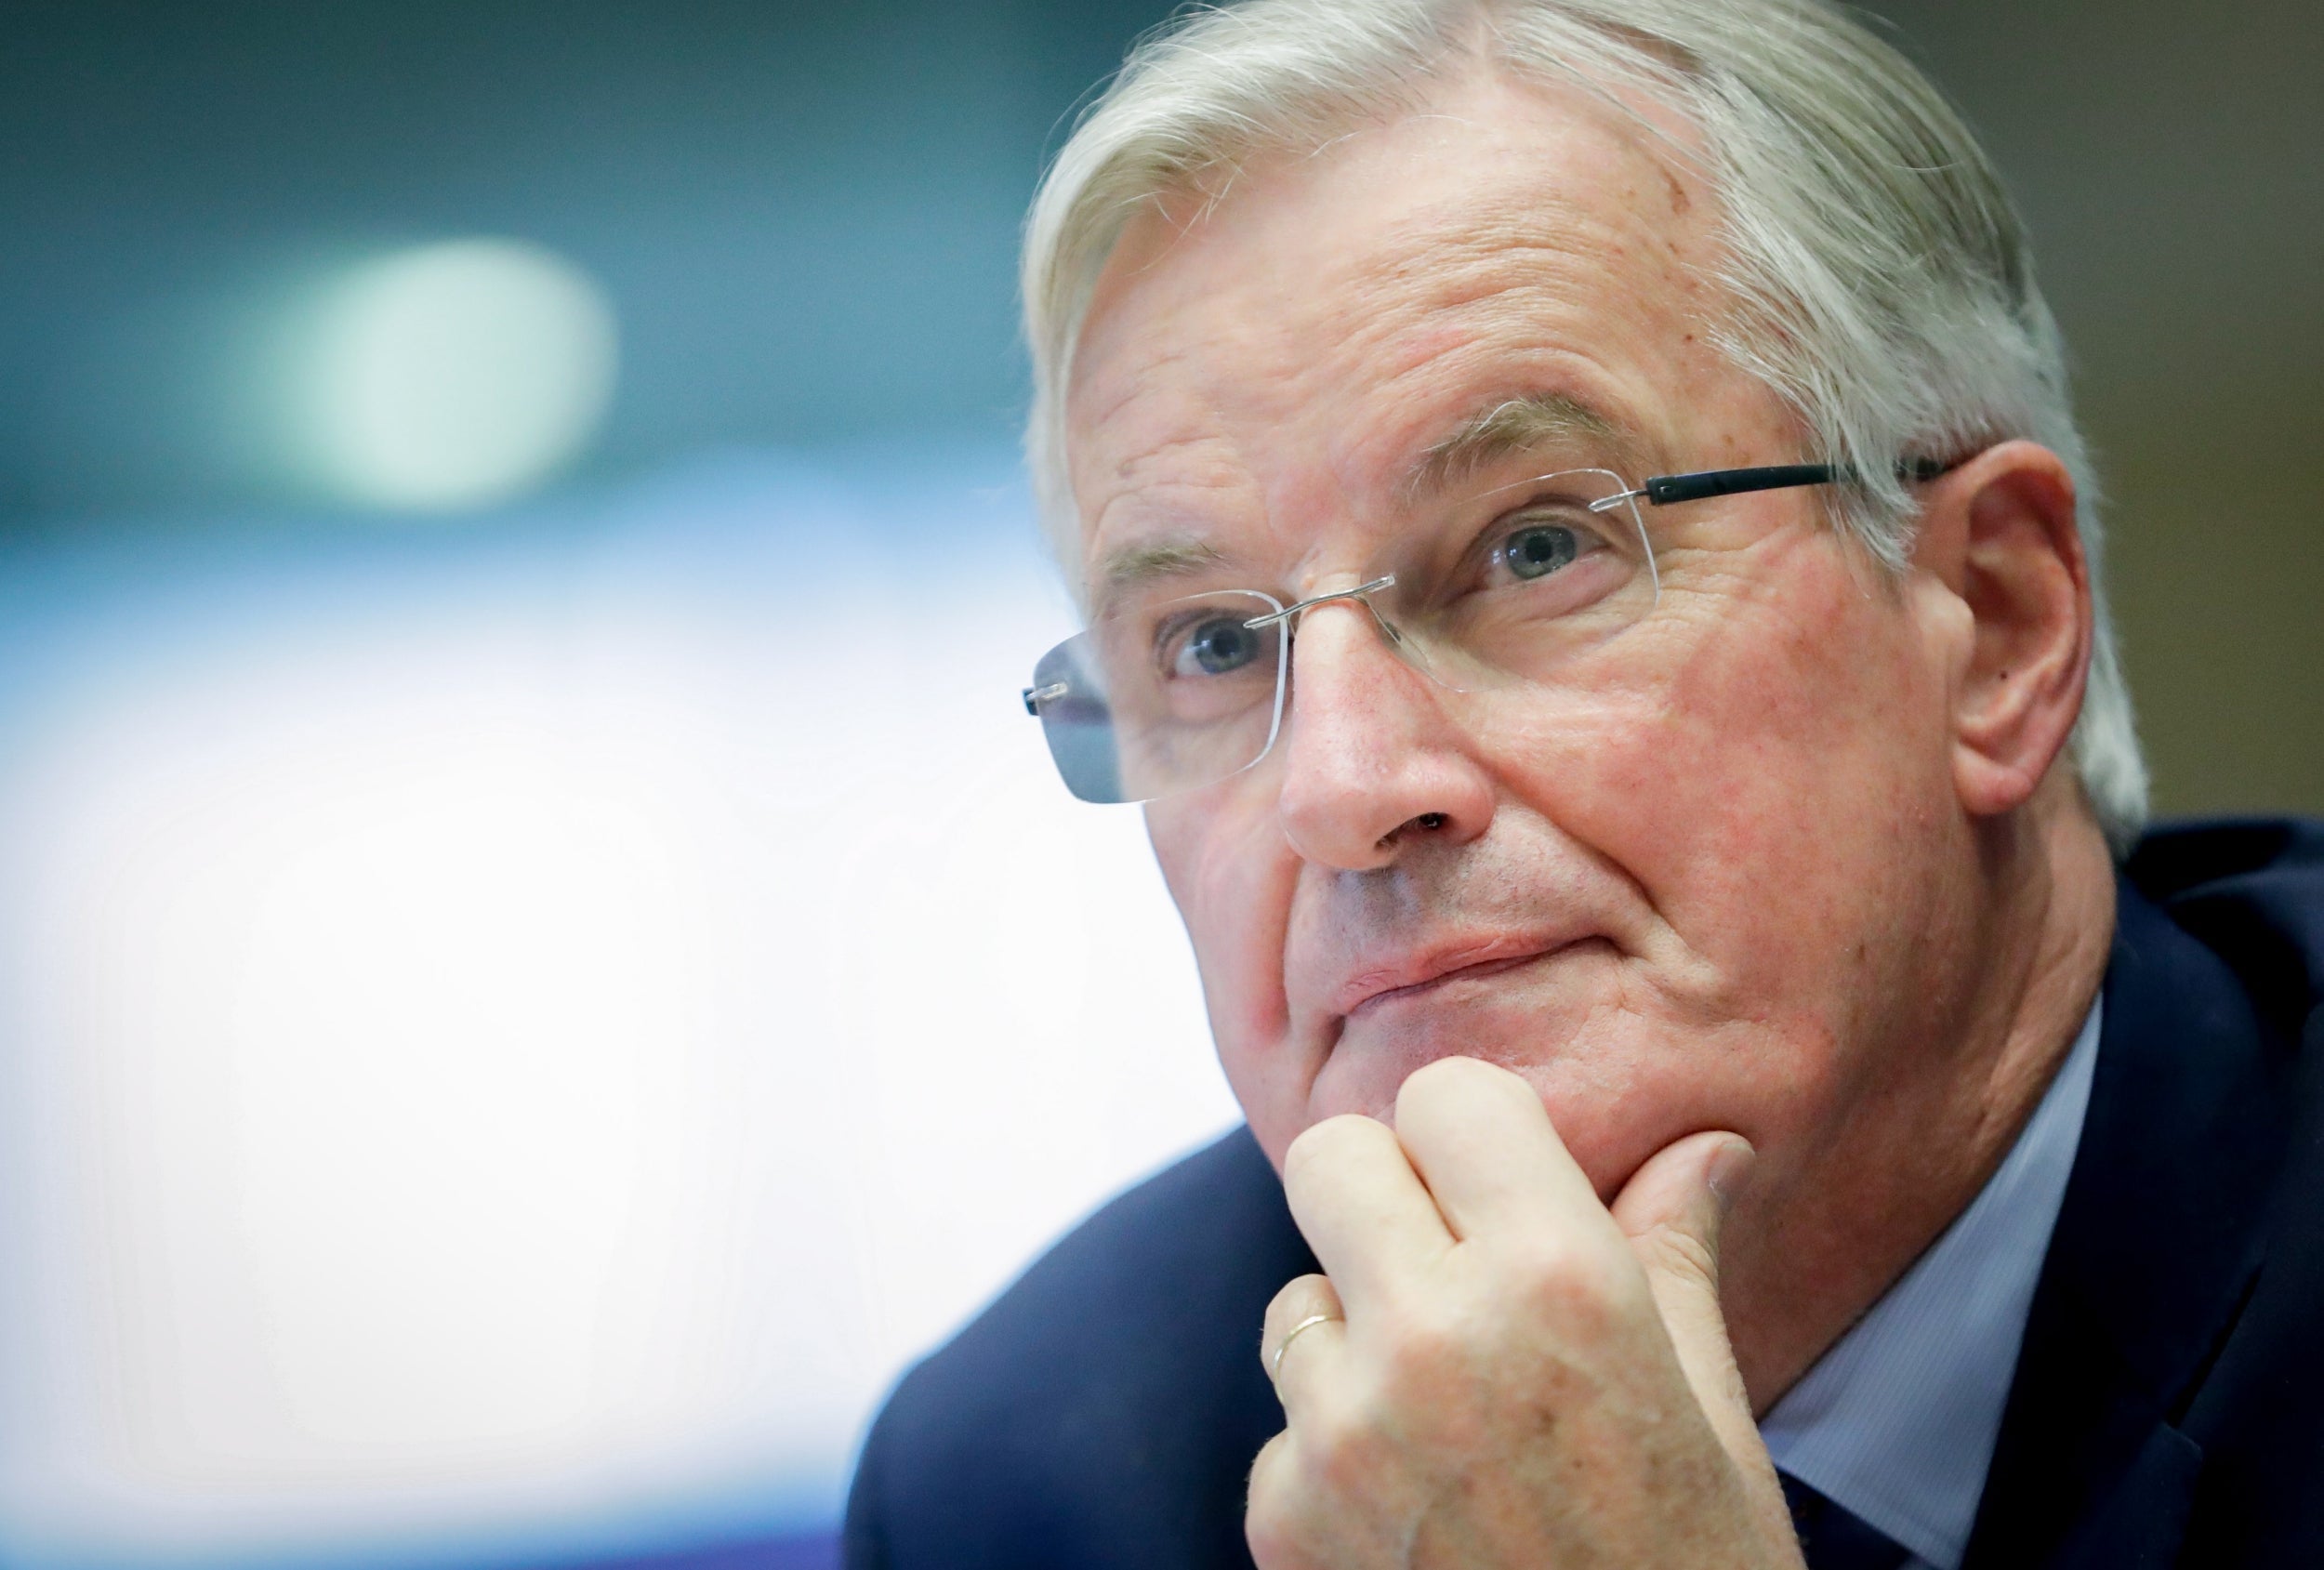 EU chief Brexit negotiator Michel Barnier is set to be confirmed as head of trade talks